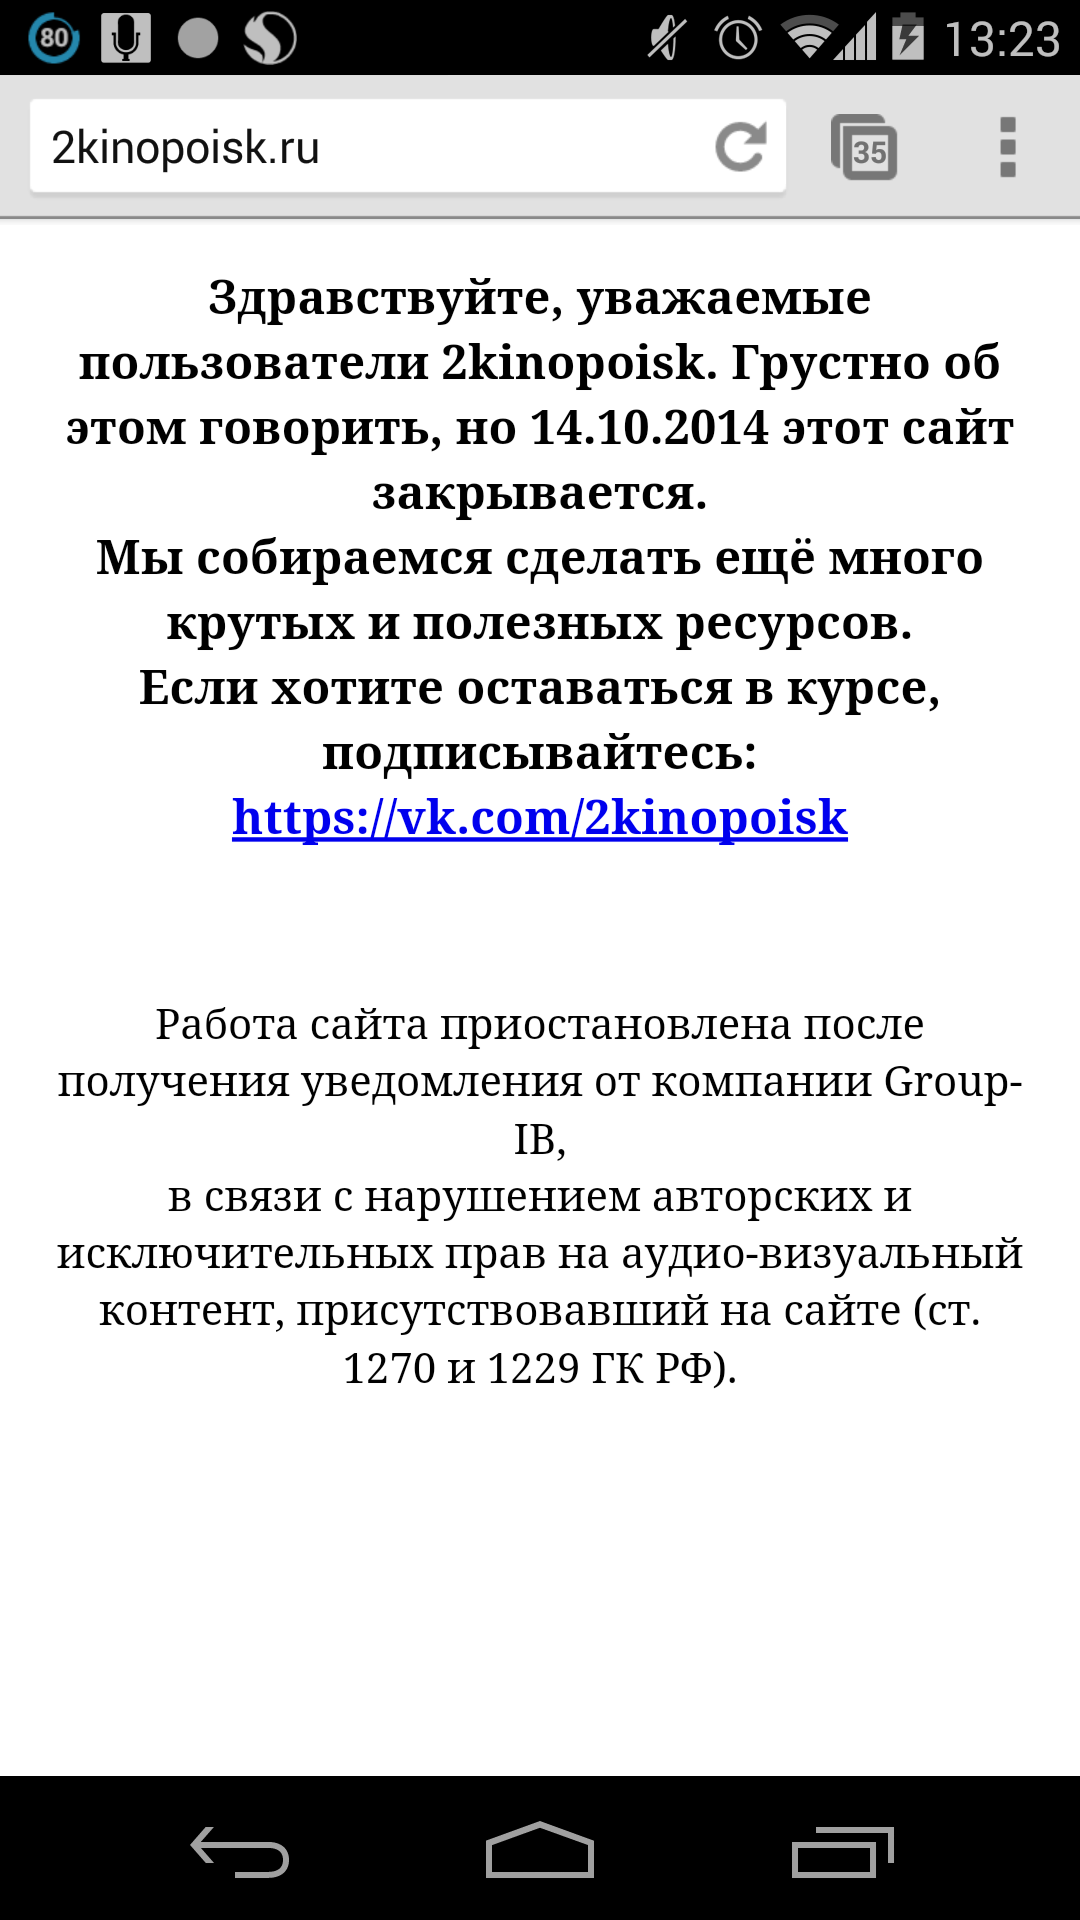 2kinopoisk.ru — anti-piracy, Group-IB